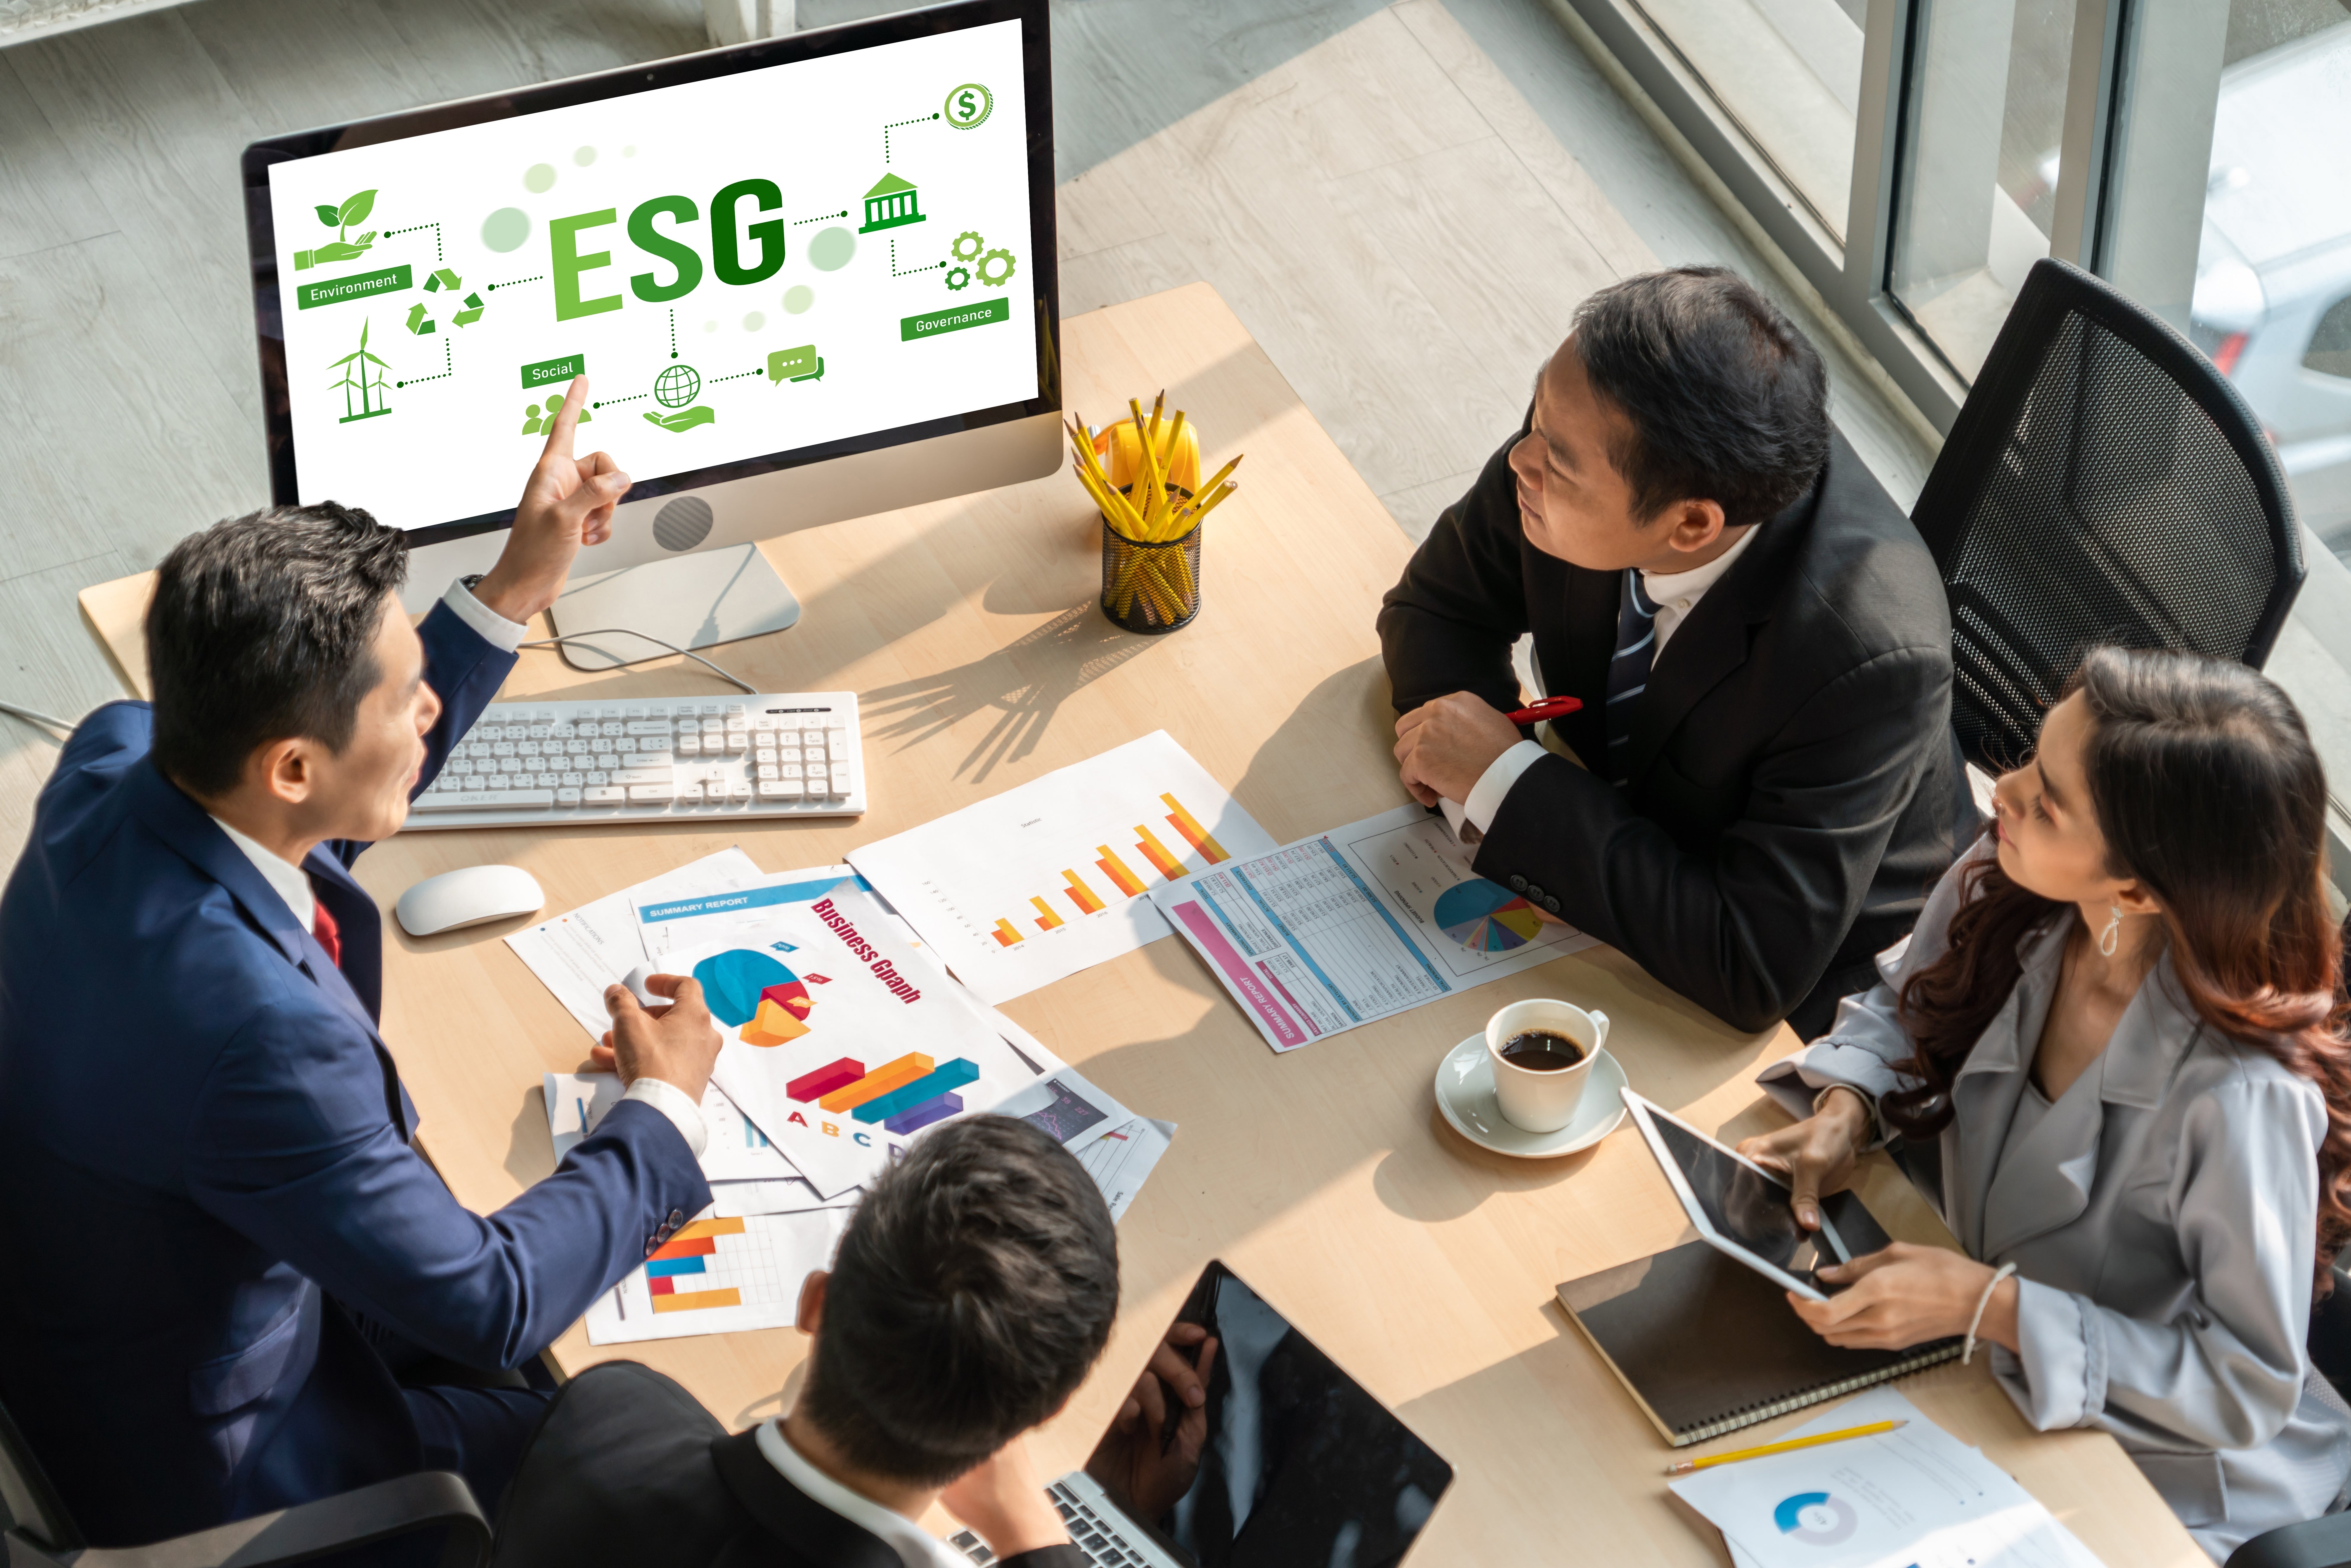 Meeting between colleagues discussing ESG